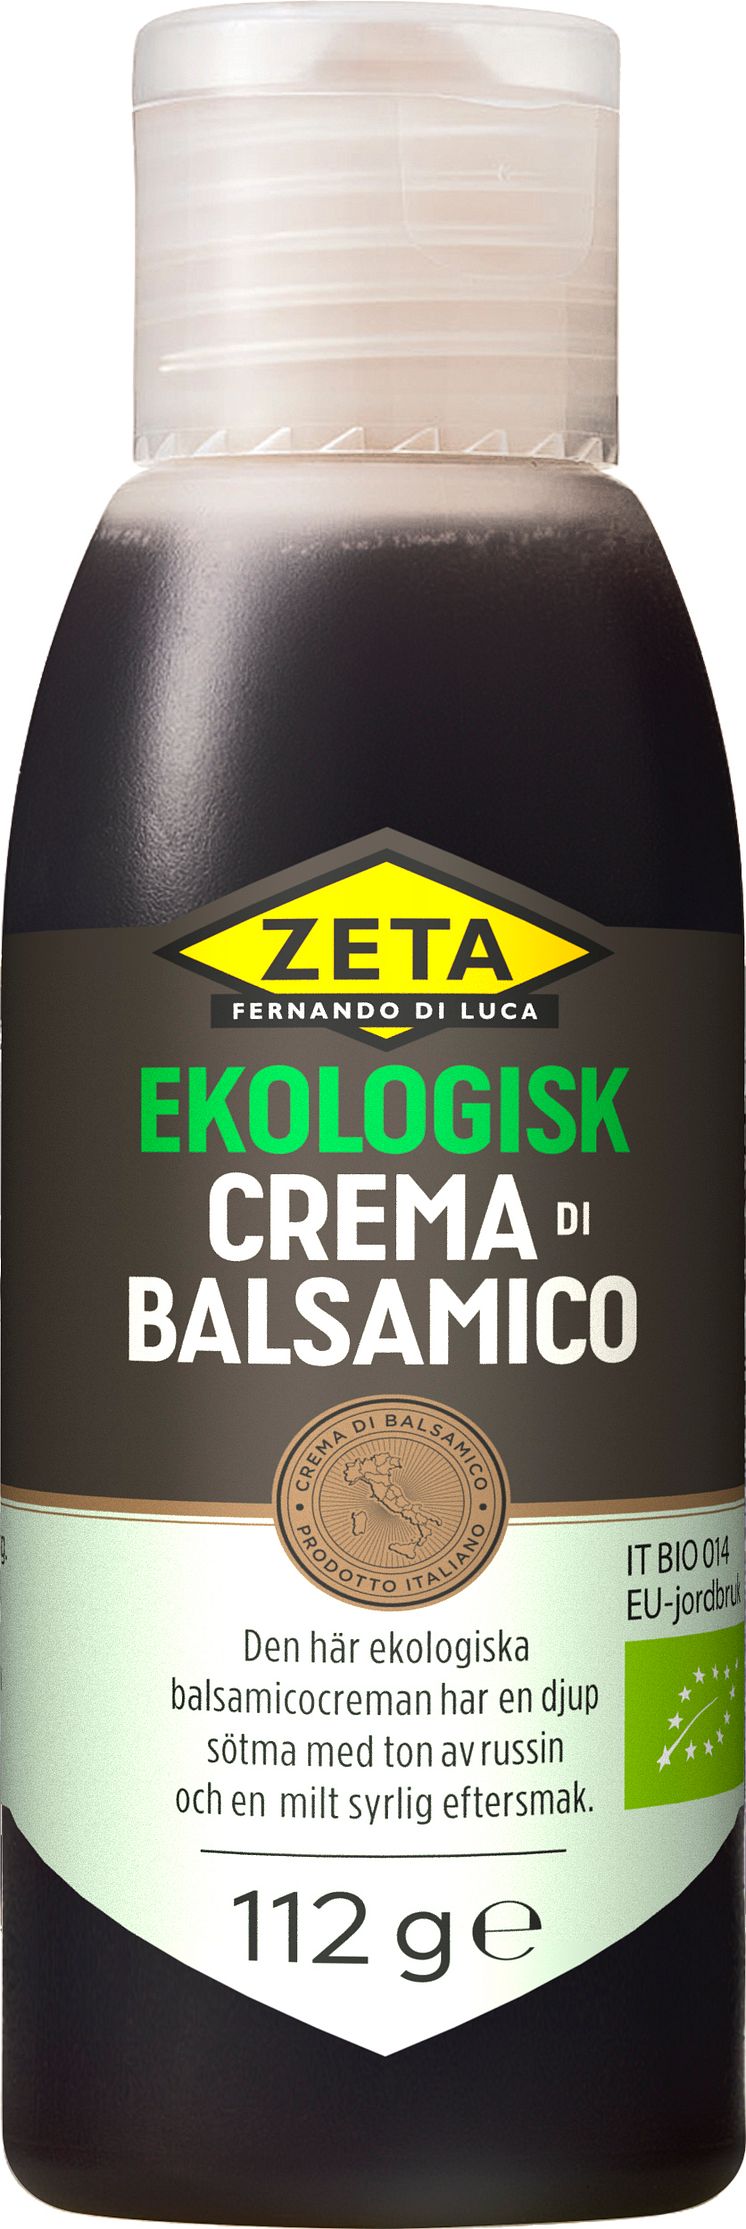 Ekologisk crema di balsamico från Zeta